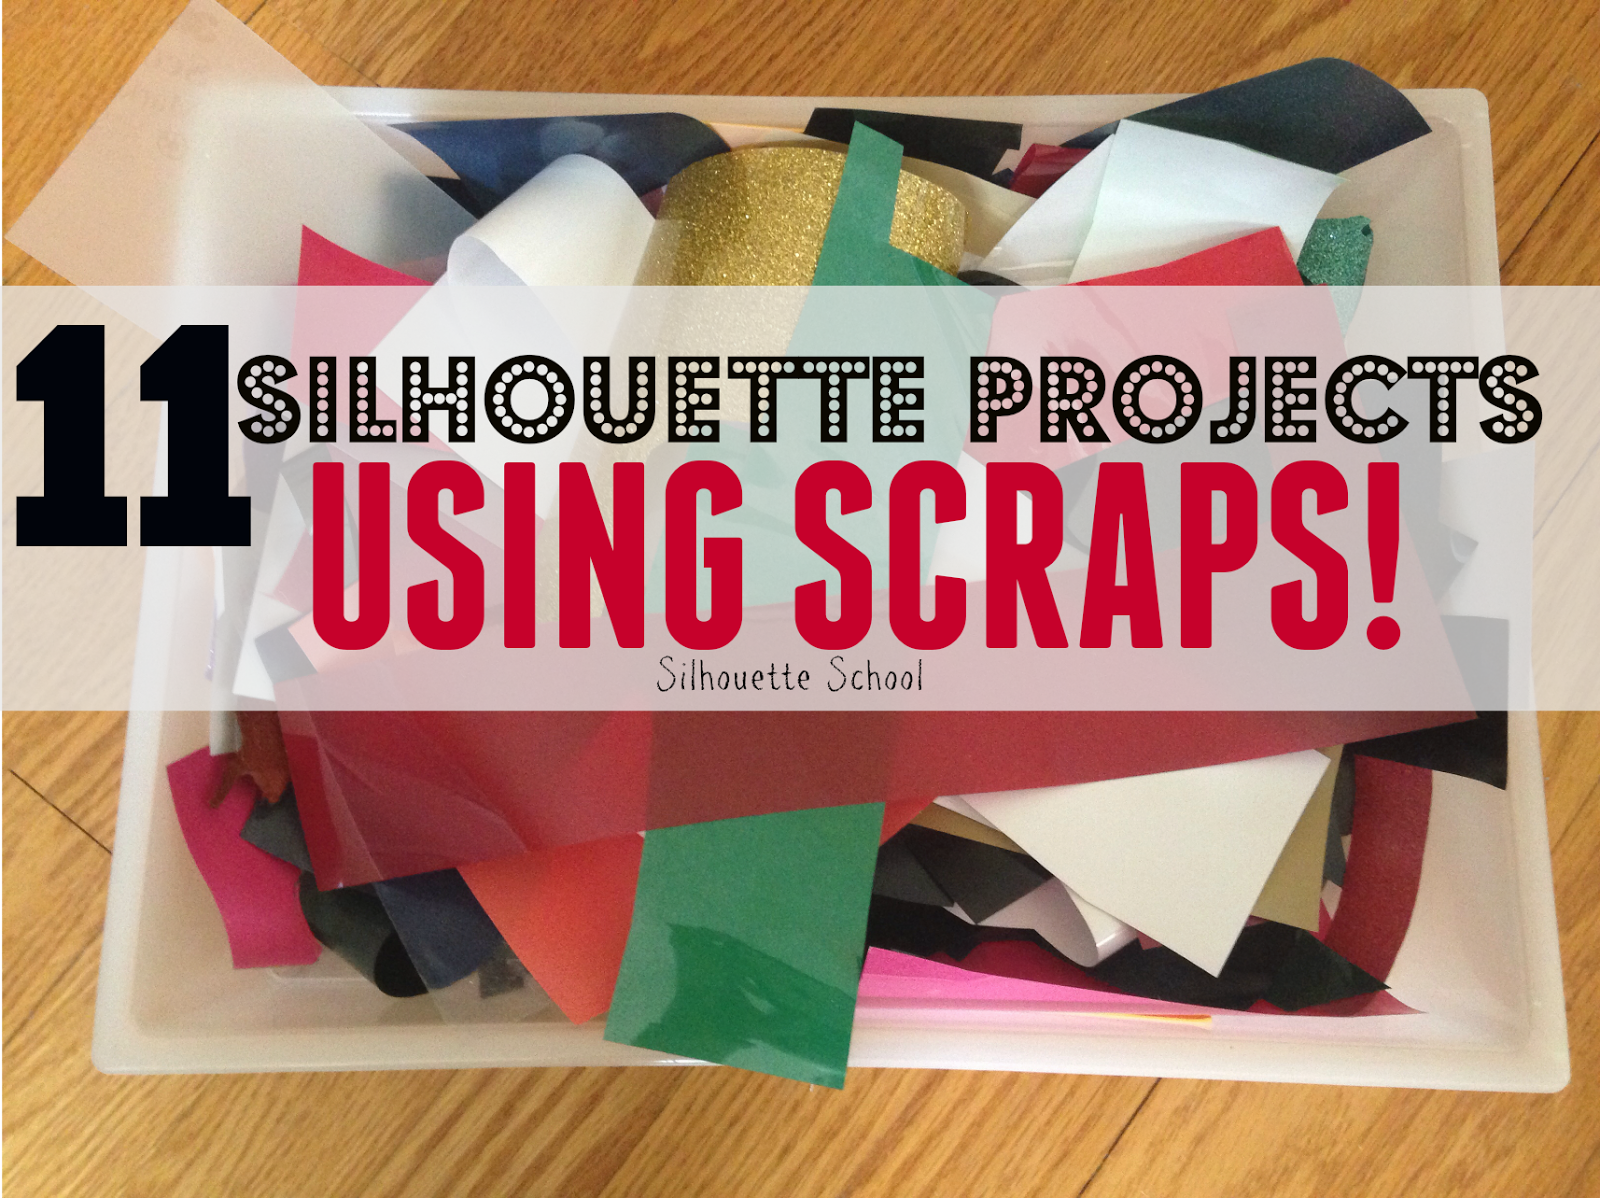 Silhouette projects, scraps, using scraps